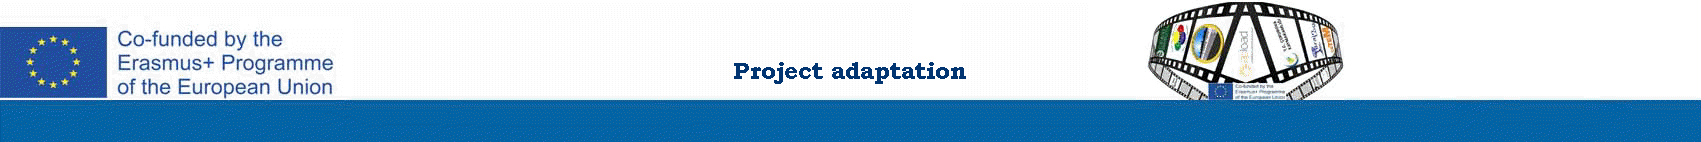 Project adaptation